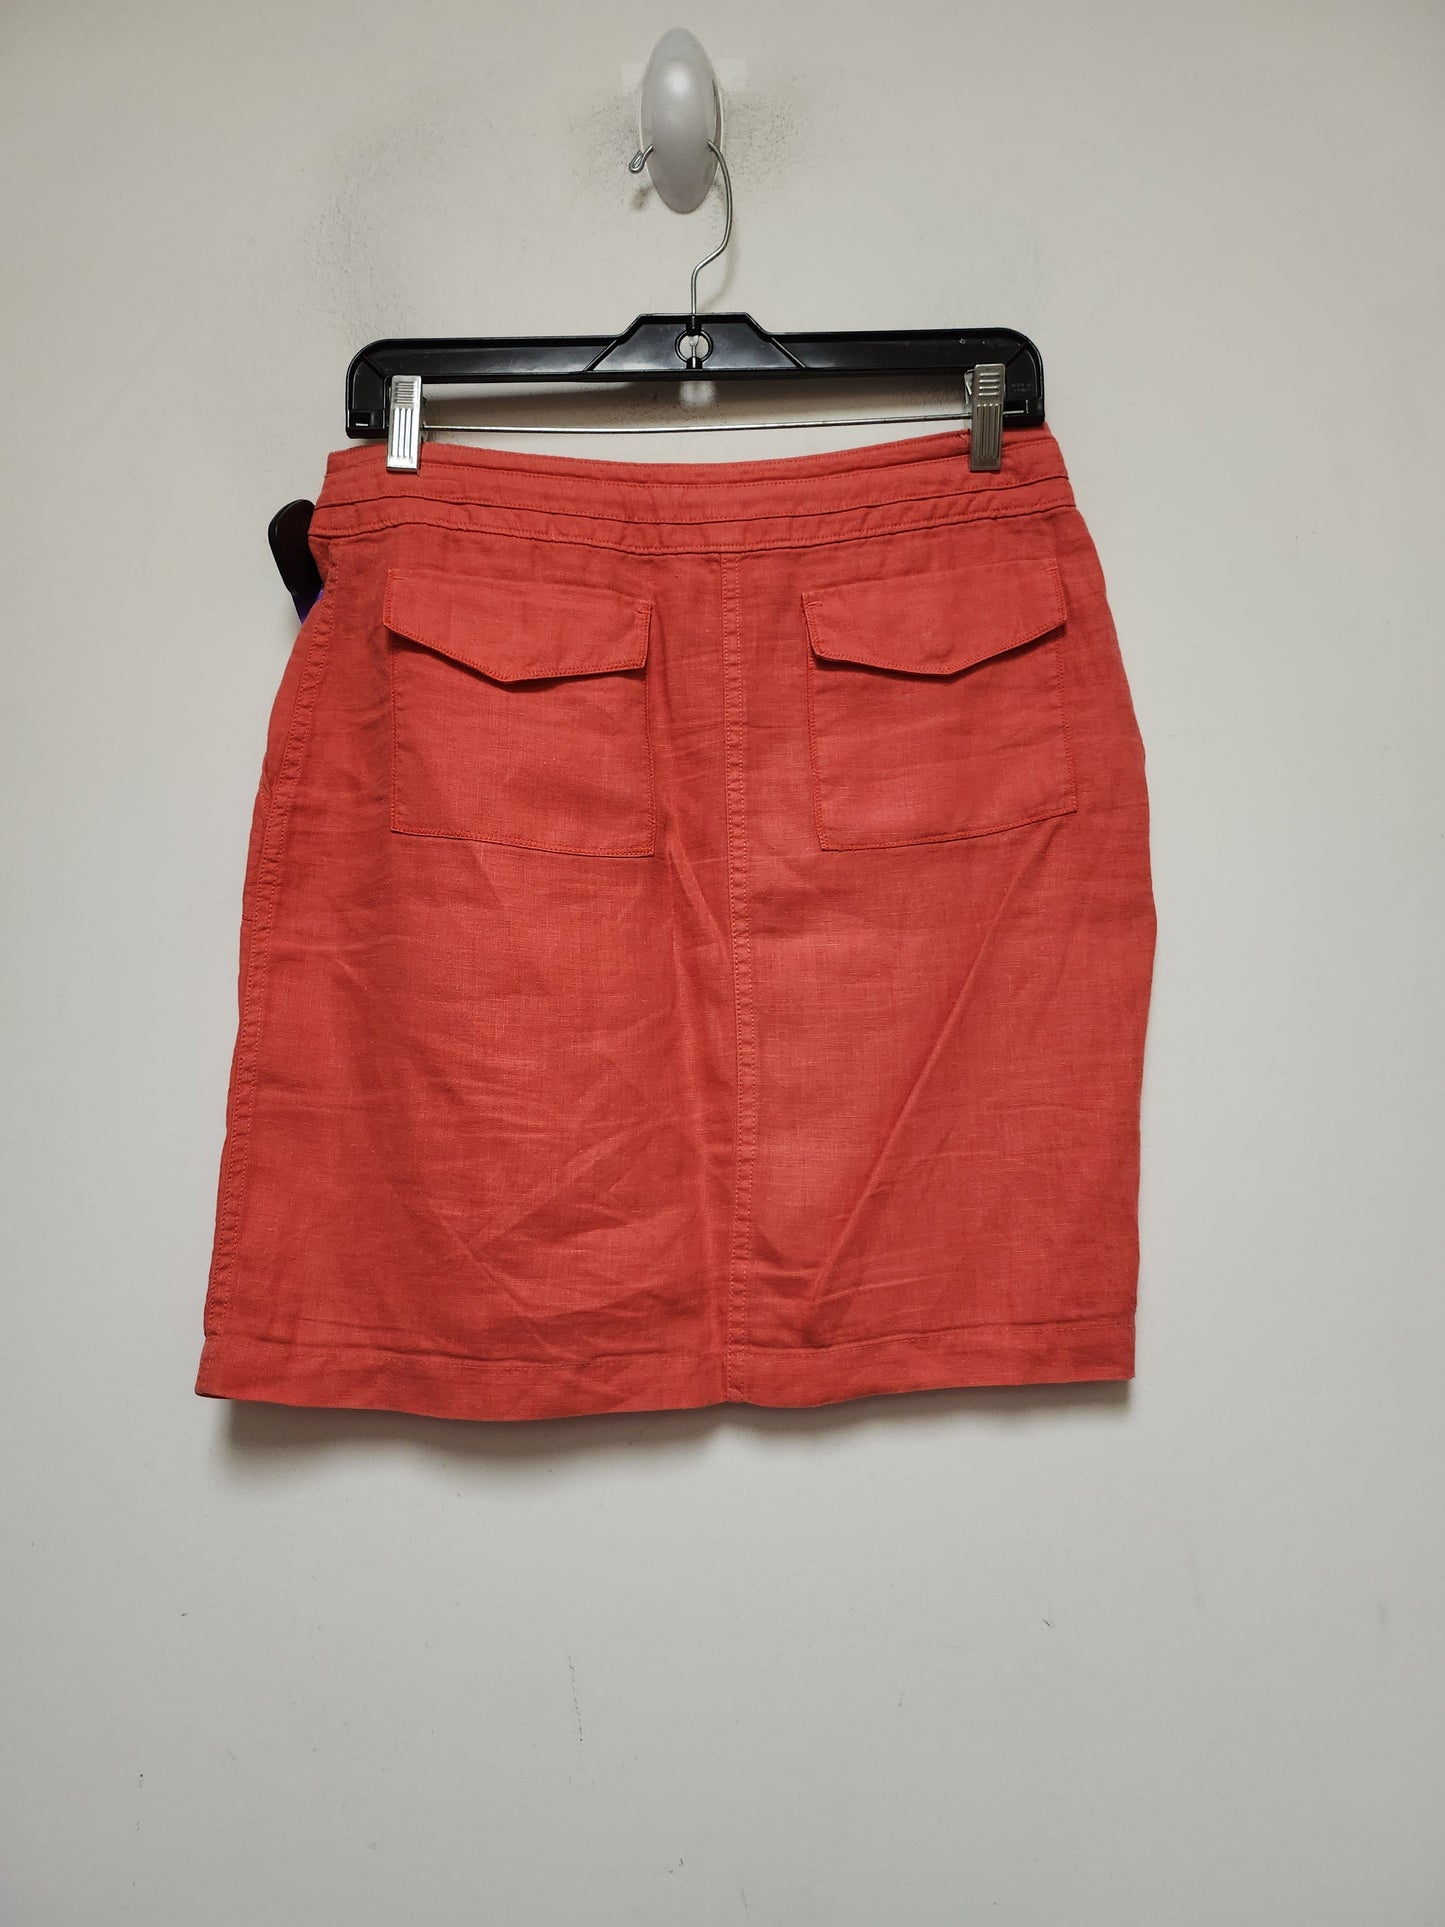 Red Skirt Mini & Short Tommy Bahama, Size 2